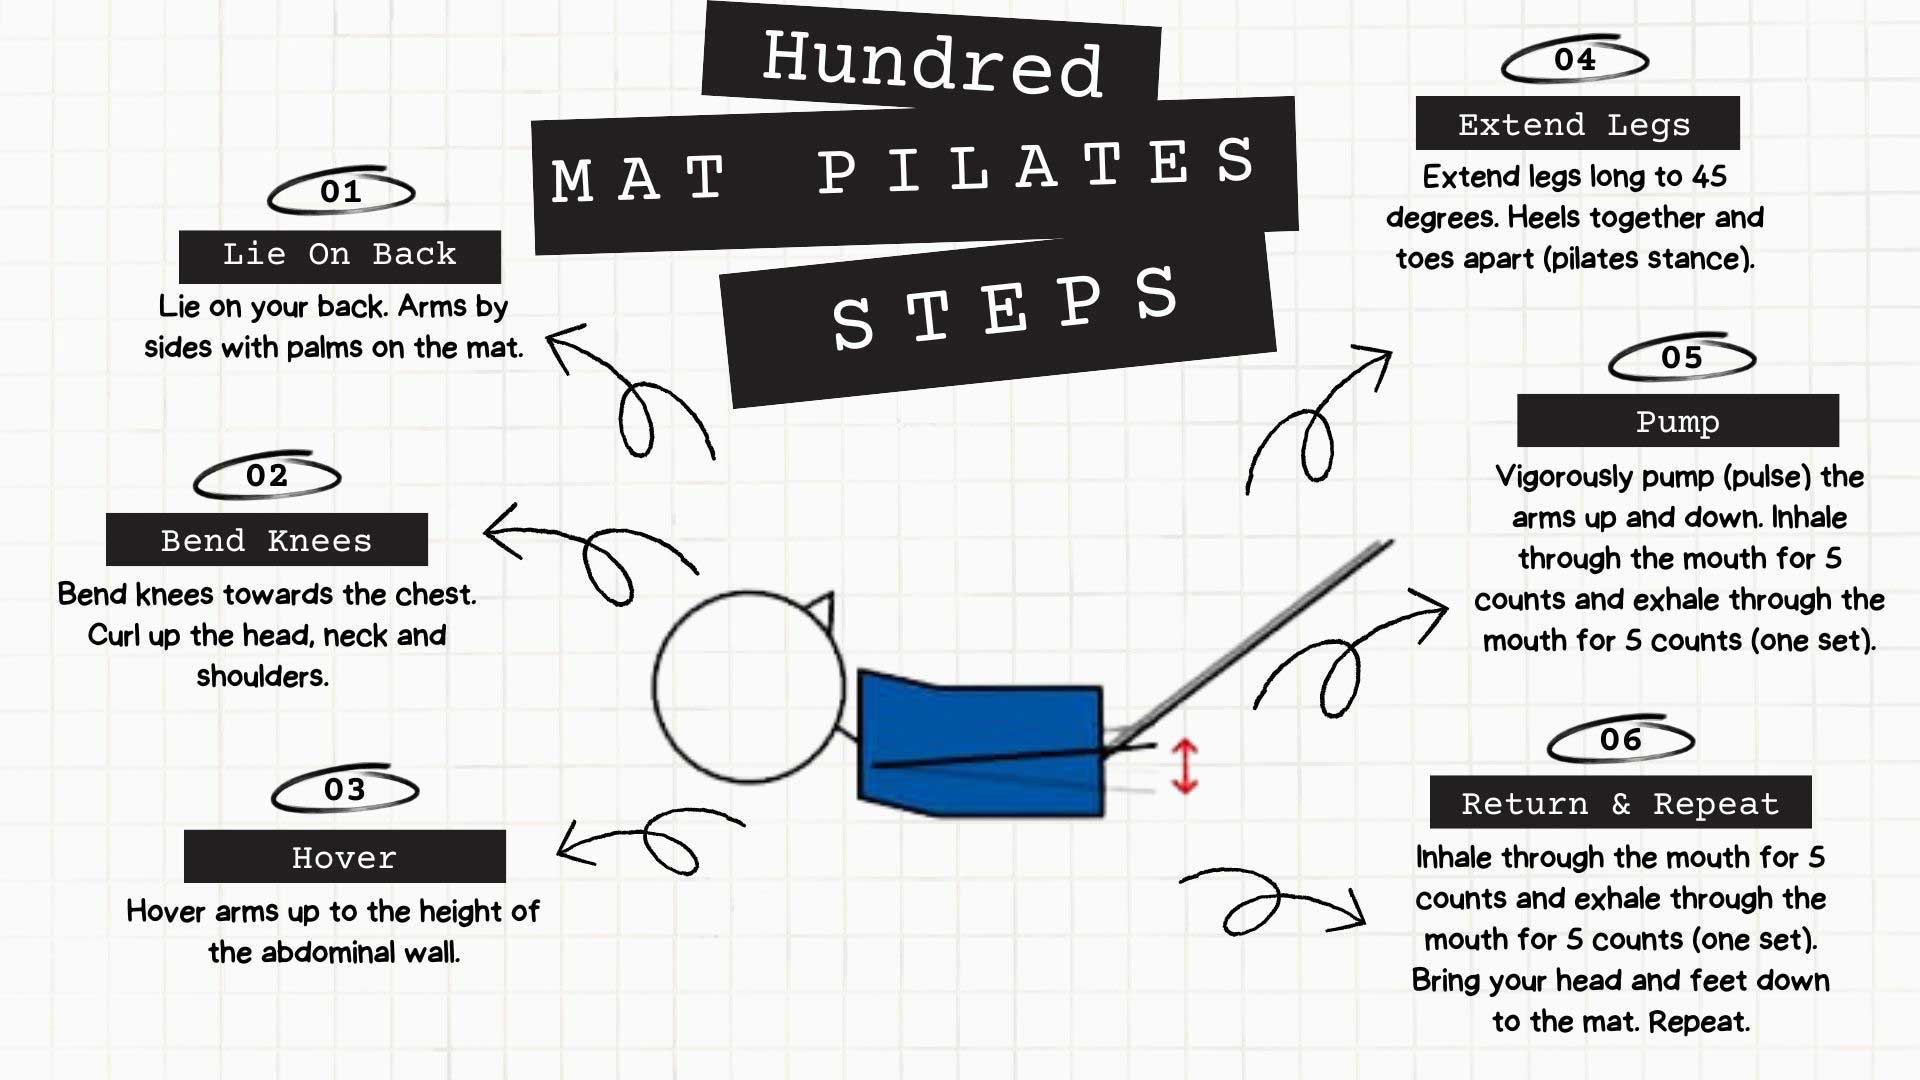 Hundred Pilates Exercise Infographic